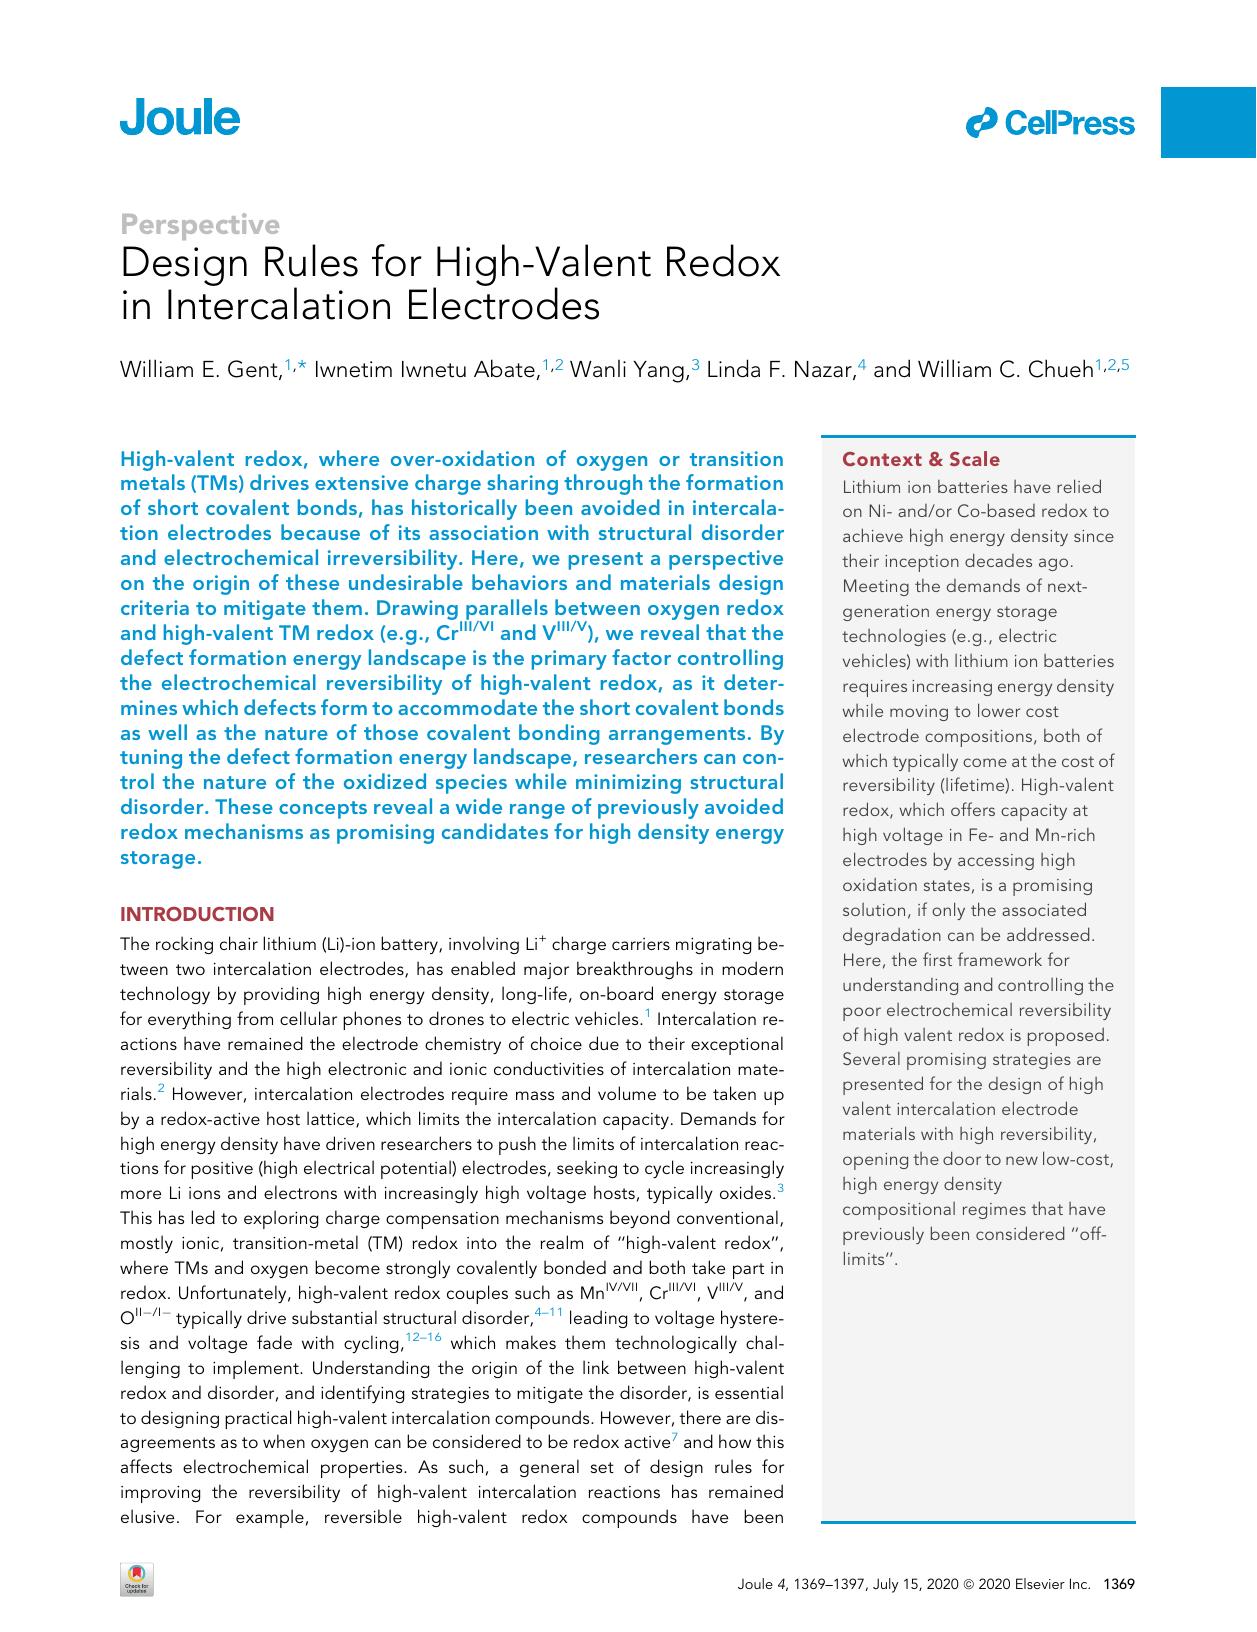 Design Rules for High-Valent Redox in Intercalation Electrodes by William E. Gent & Iwnetim Iwnetu Abate & Wanli Yang & Linda F. Nazar & William C. Chueh